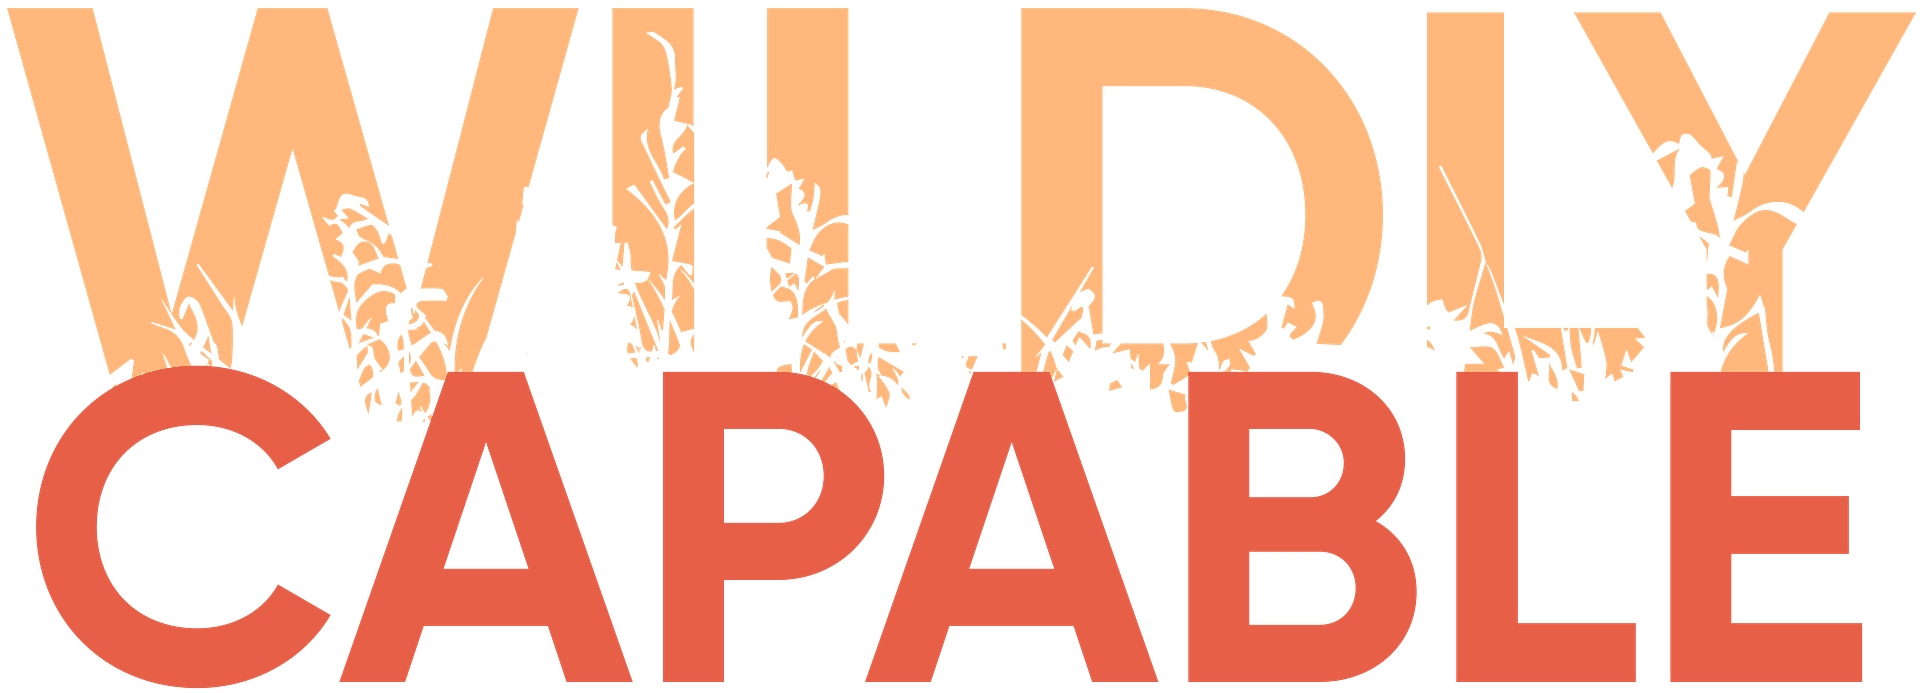 WildlyCapable Logo